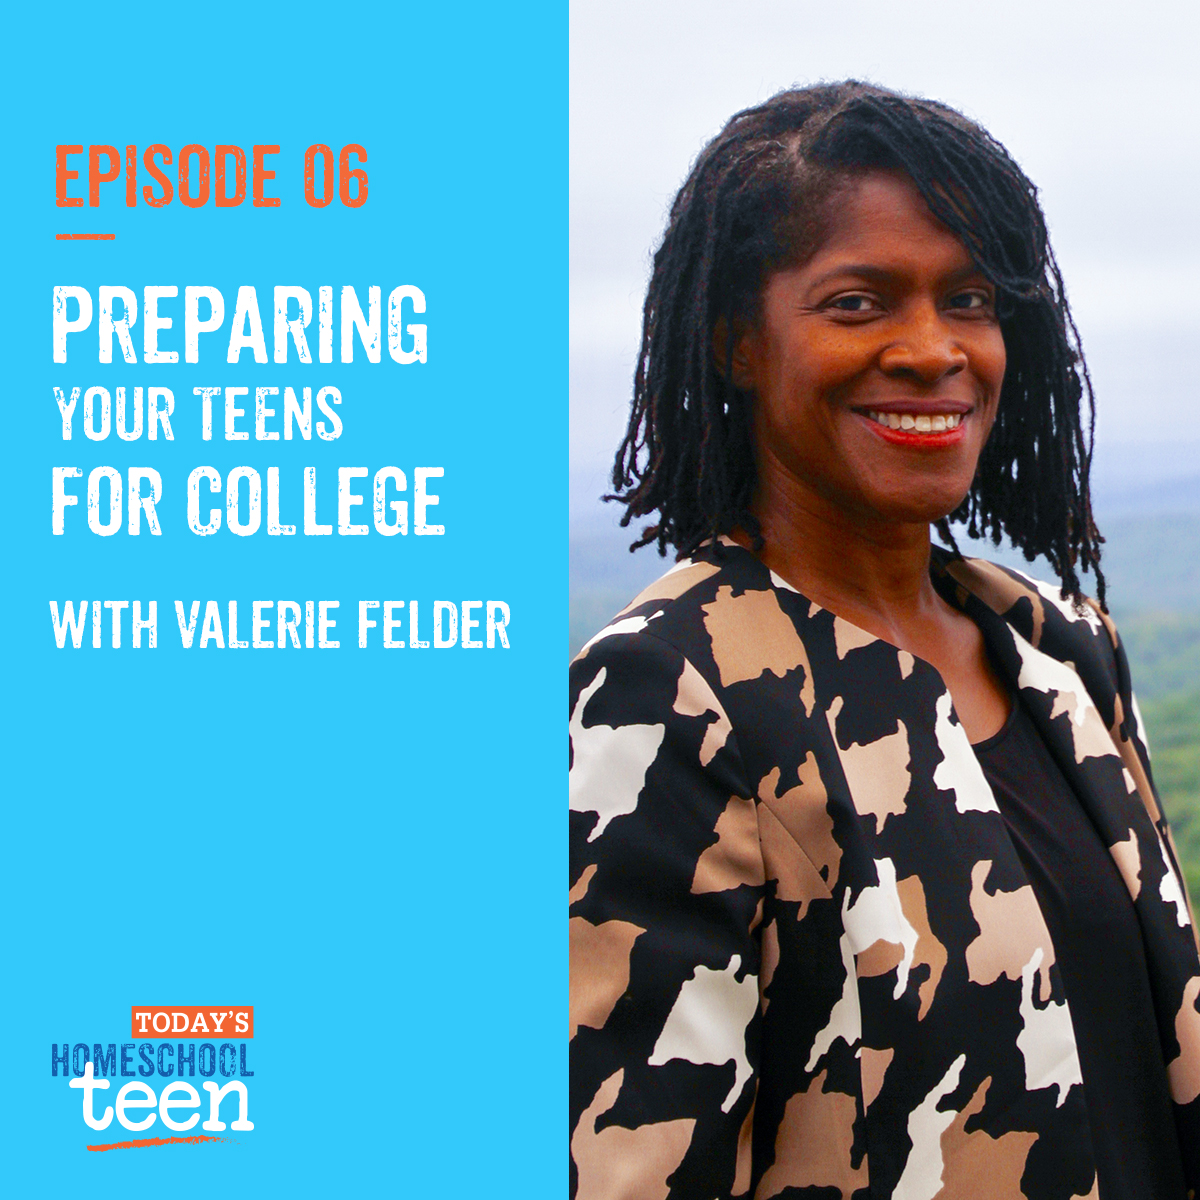 Episode 6: Preparing Your Teens for College with Valerie Felder